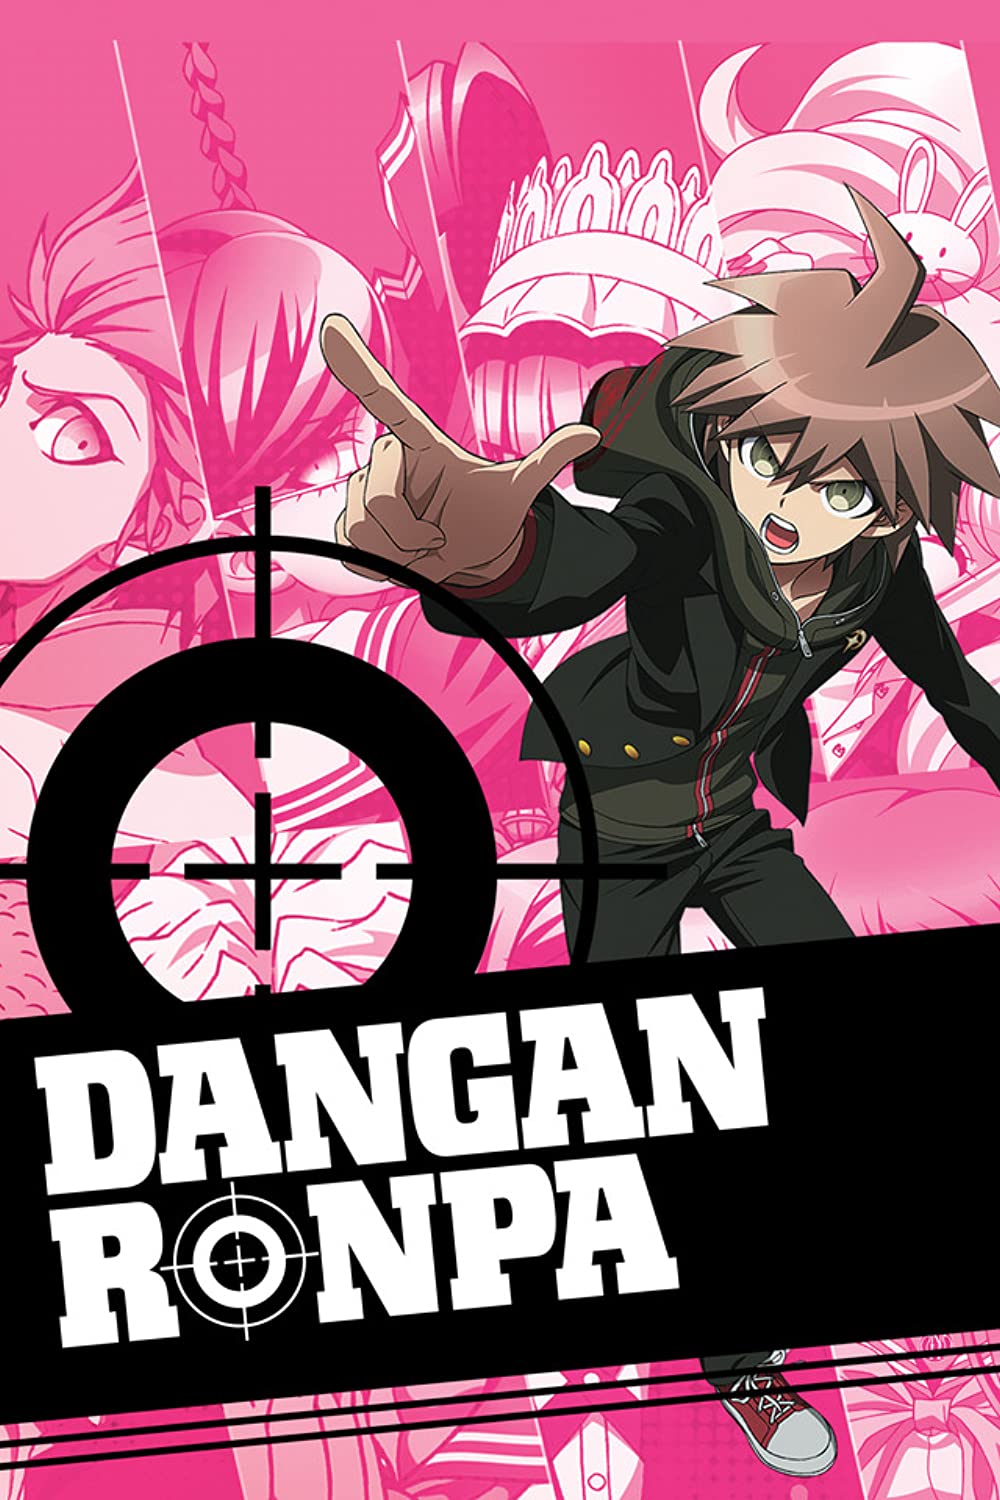 Danganronpa The Animation (2013) (Dan-gan-ron-pa)